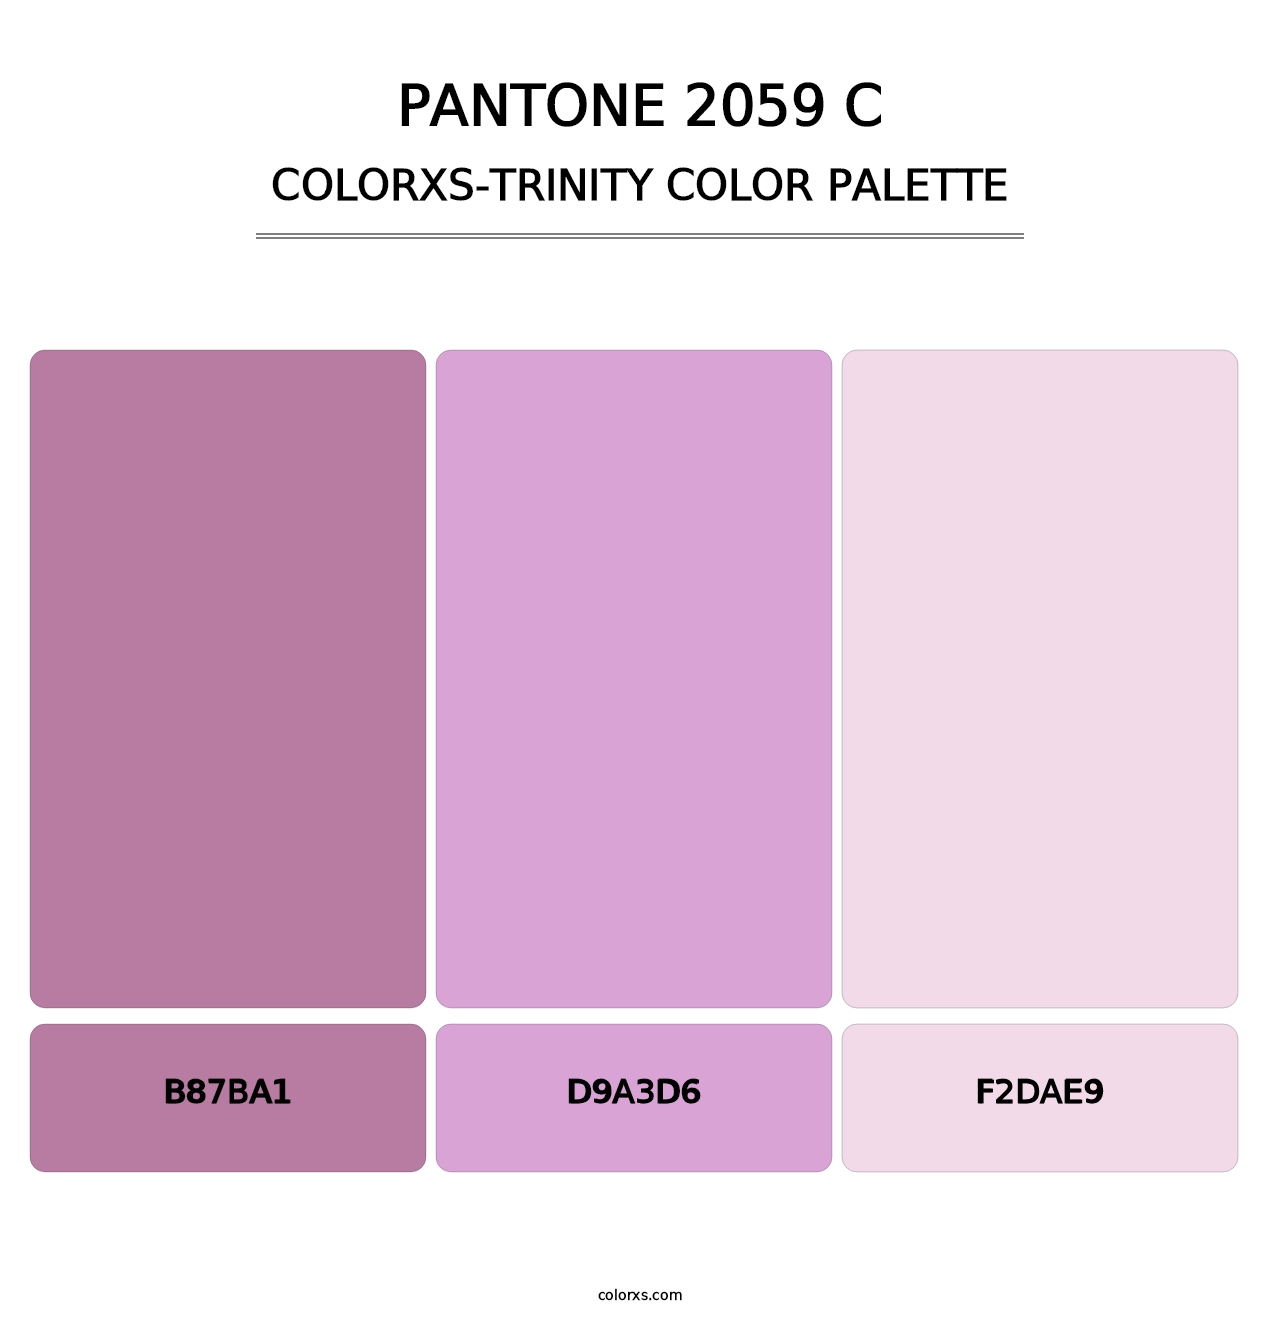 PANTONE 2059 C - Colorxs Trinity Palette